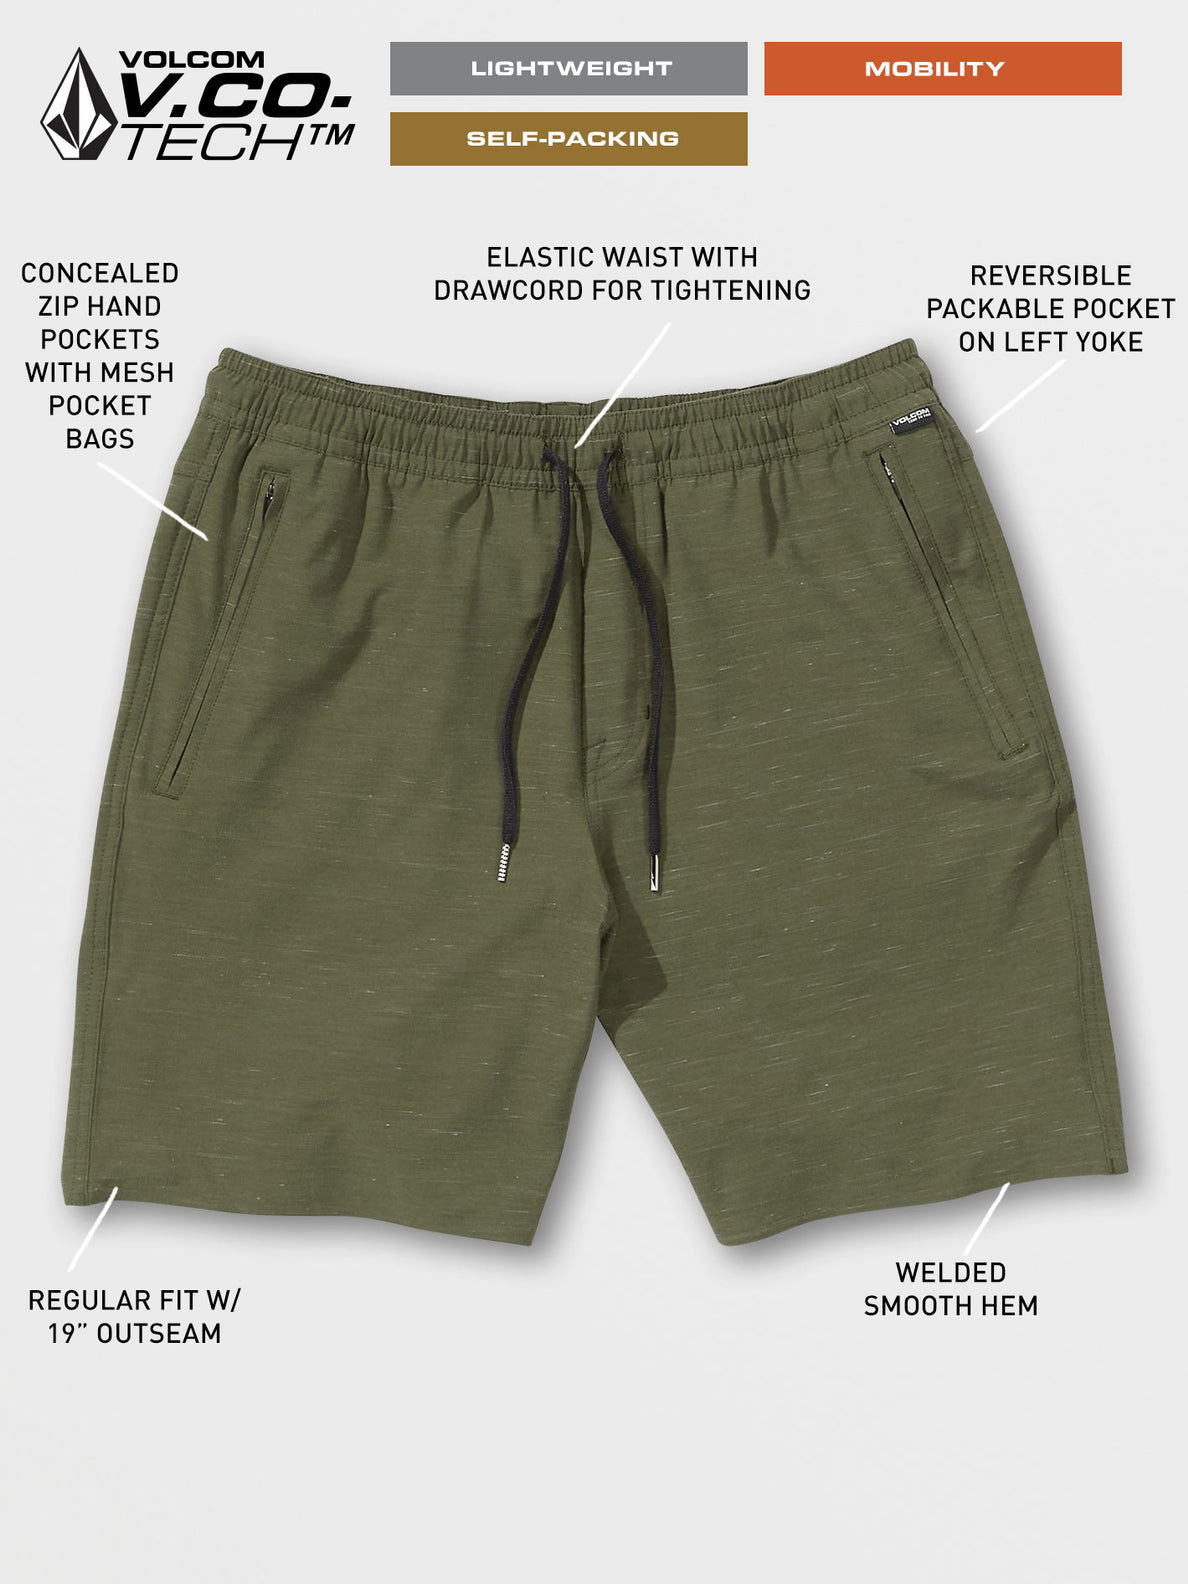 Wrecpack Hybrid Shorts - Military